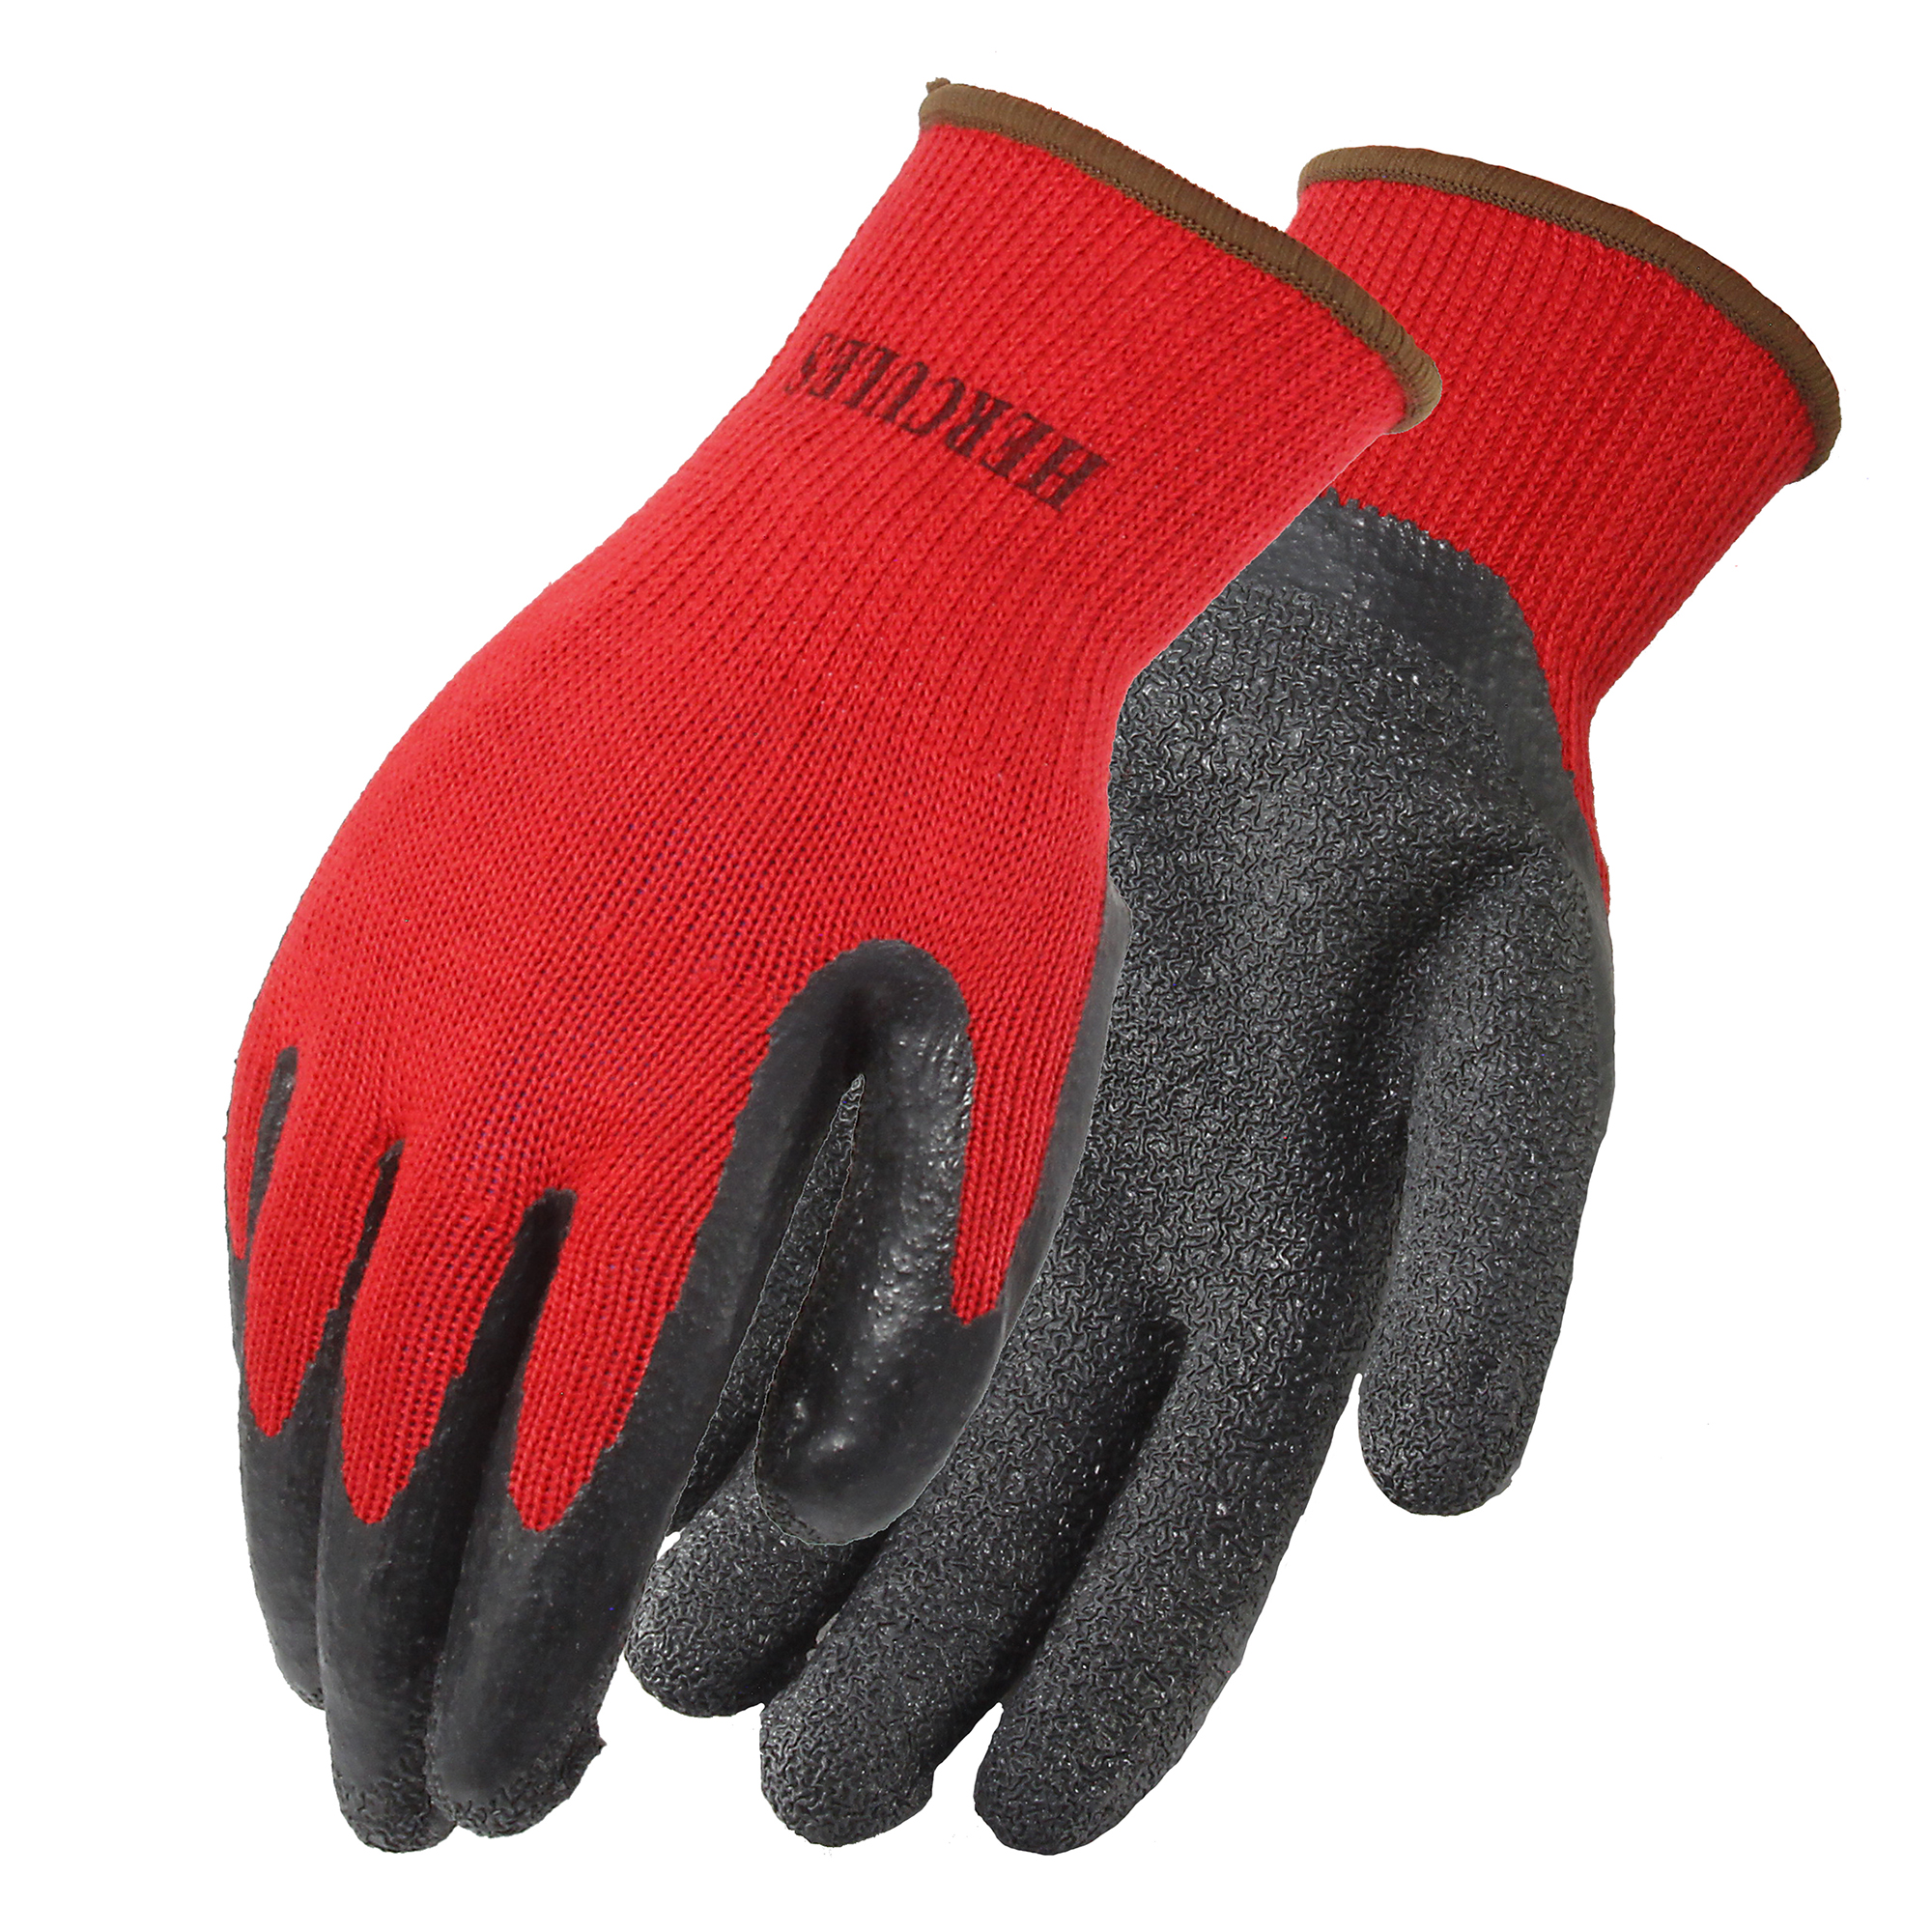 Hercules Gloves